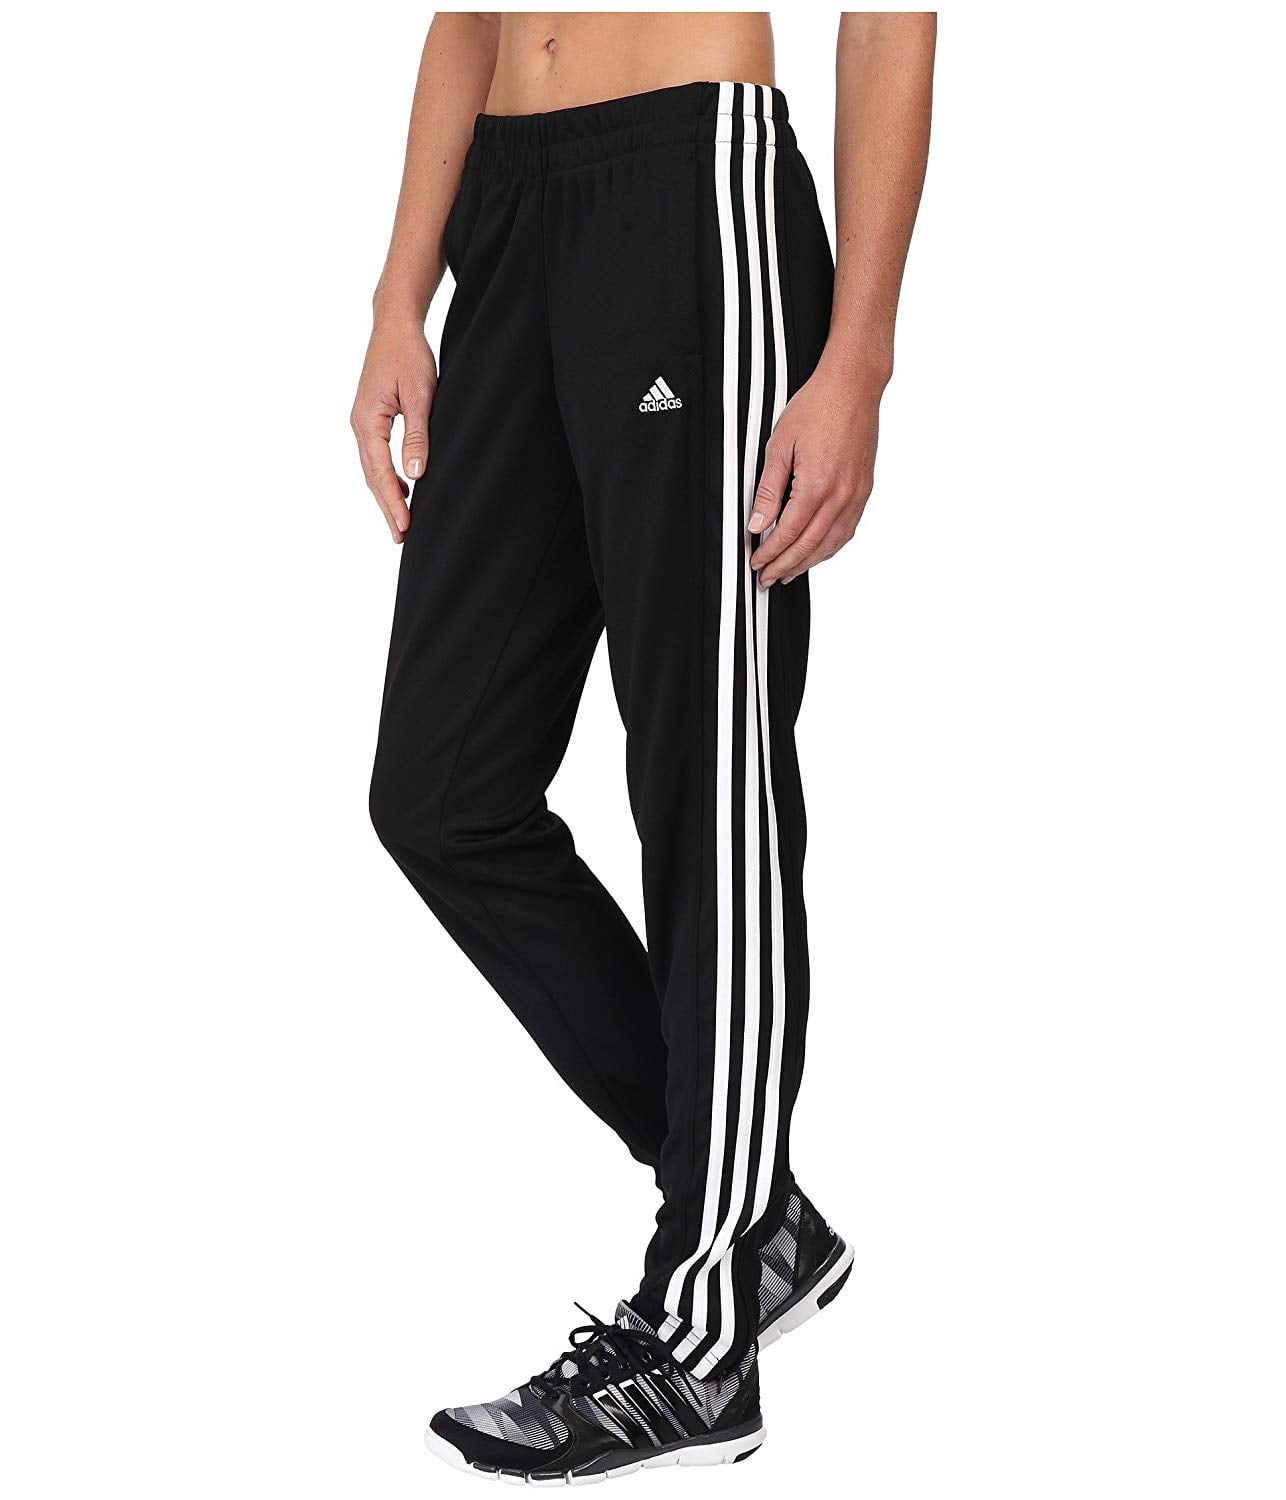 Adidas Women S T10 Pants Black White Xx Large Walmart Canada